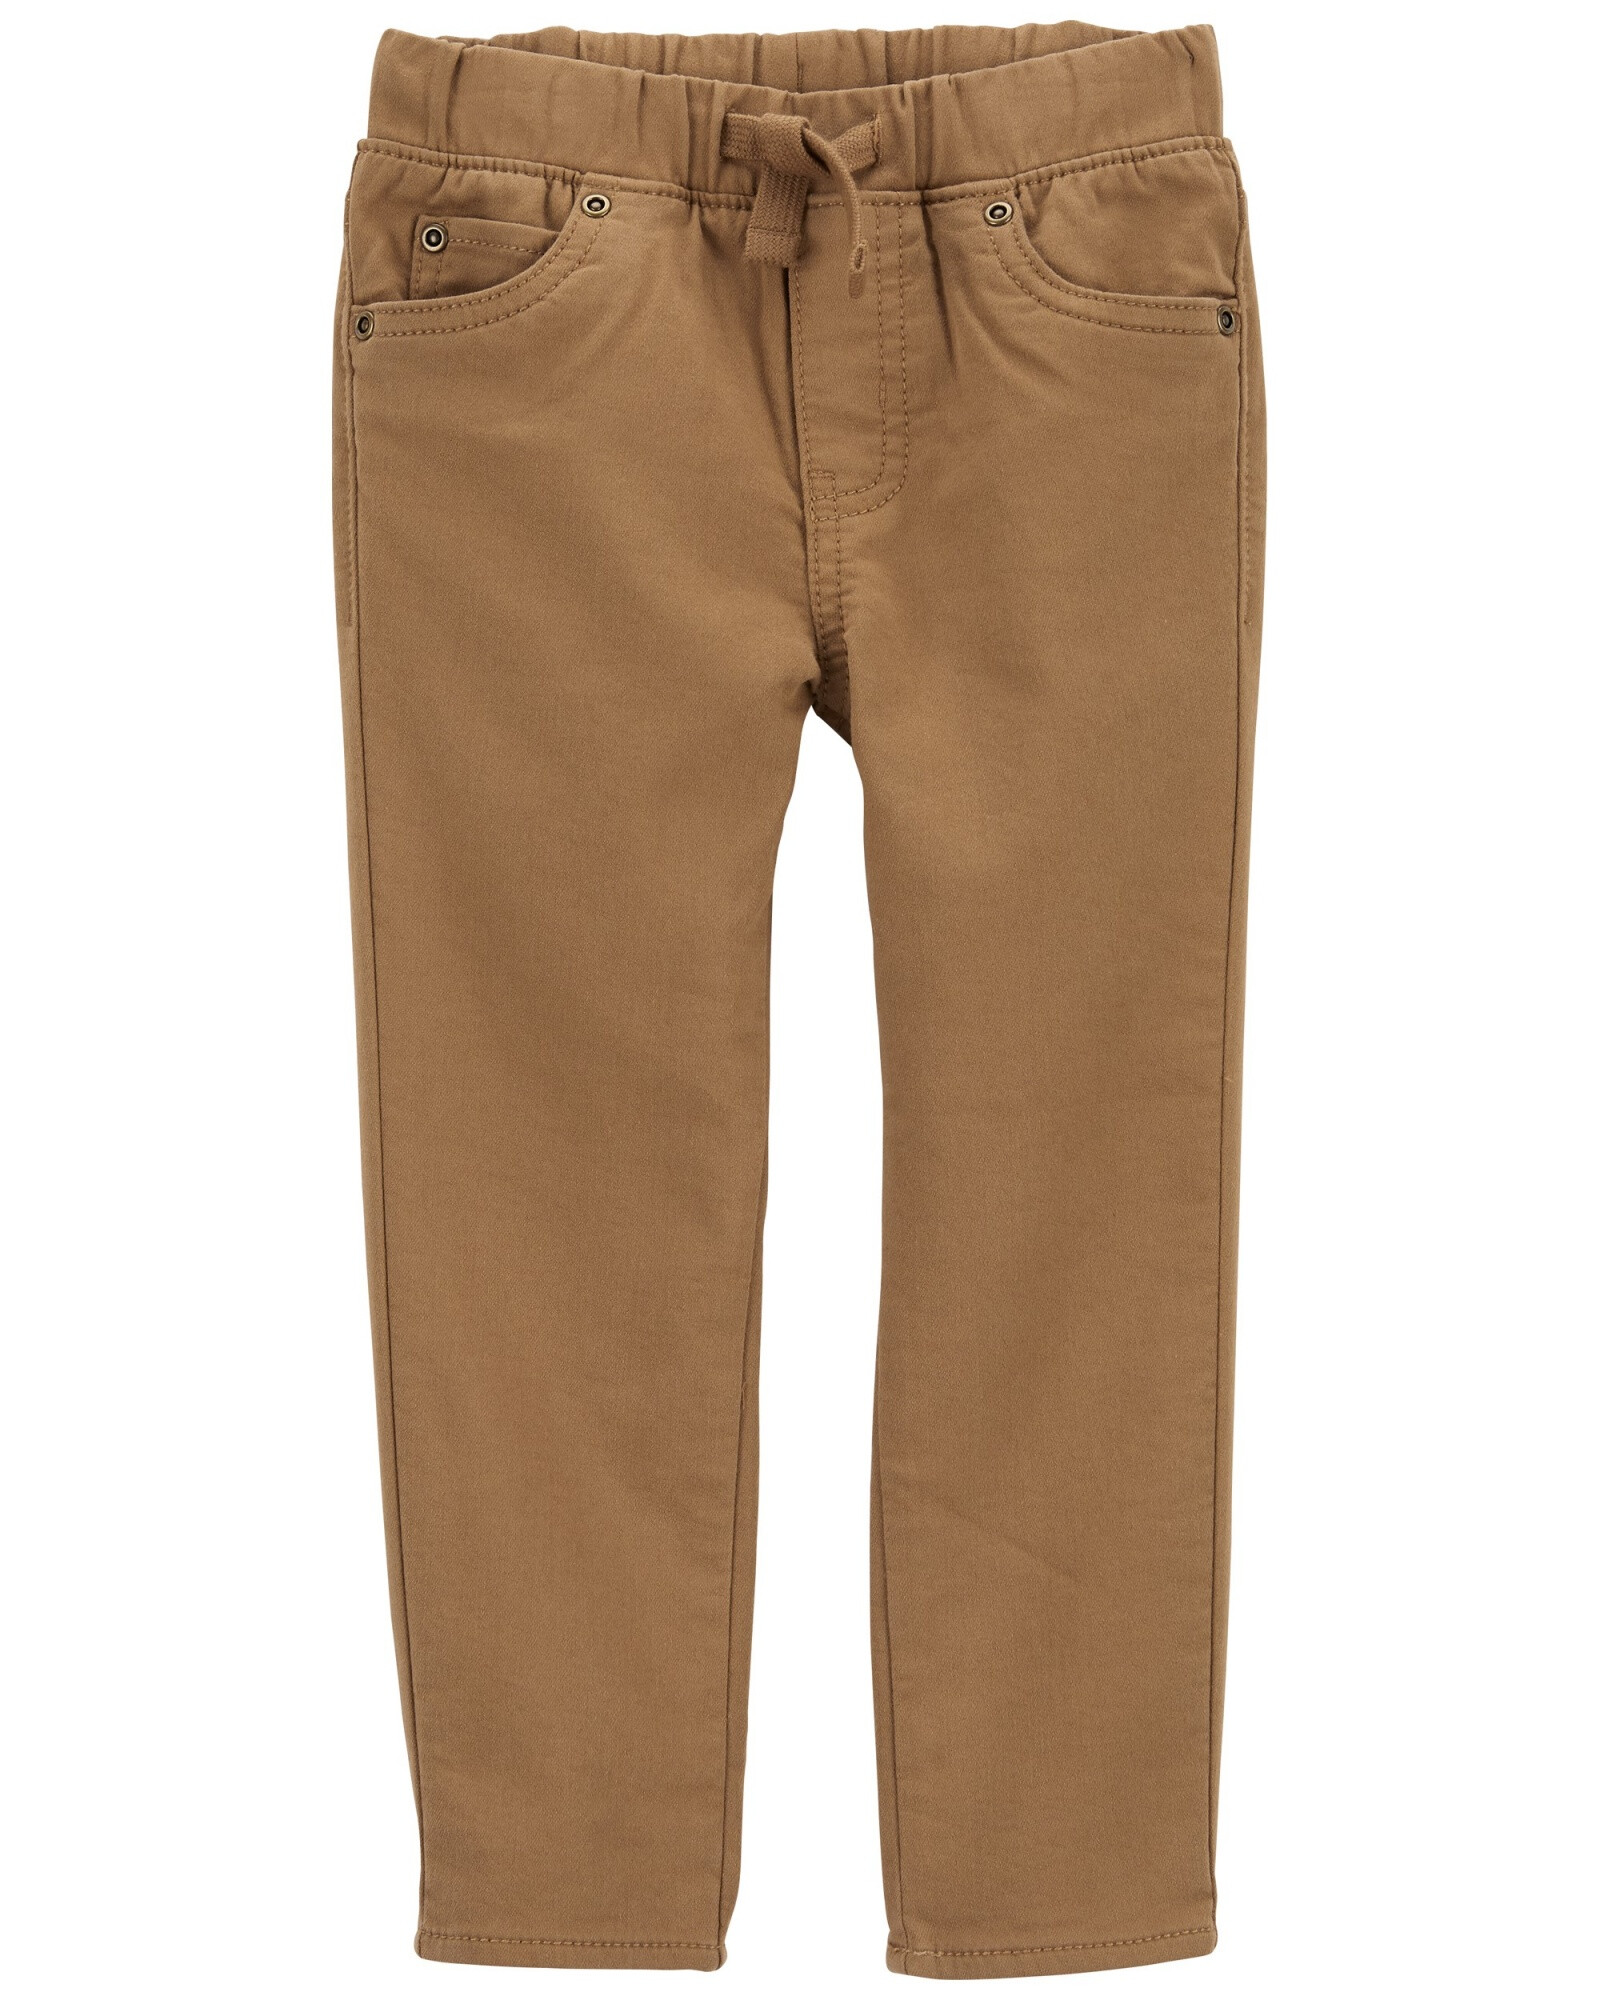 Pantalón en tejido dobby, color khaki. Talles 2-5T Sin color